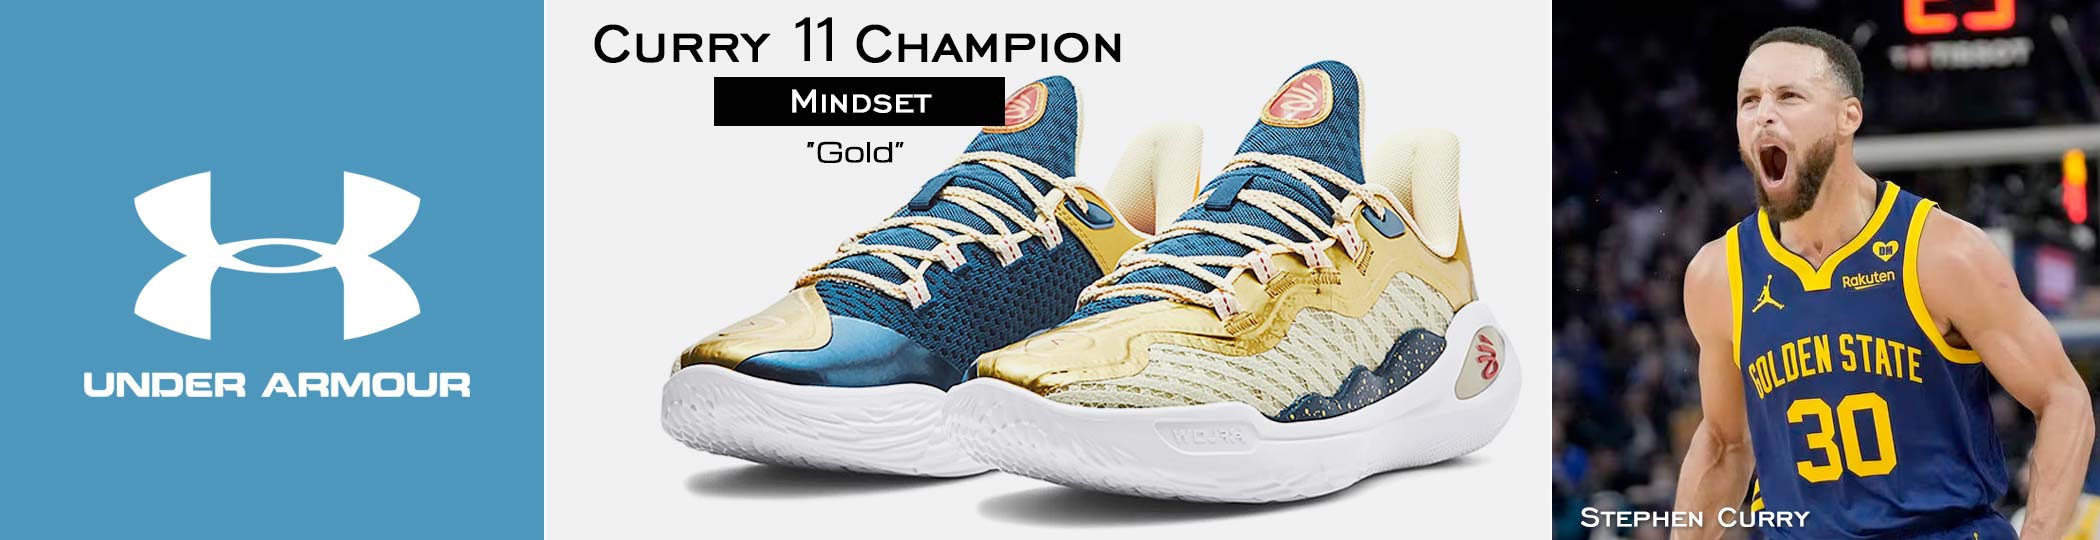 Curry 11 Championship Mindset - Gold